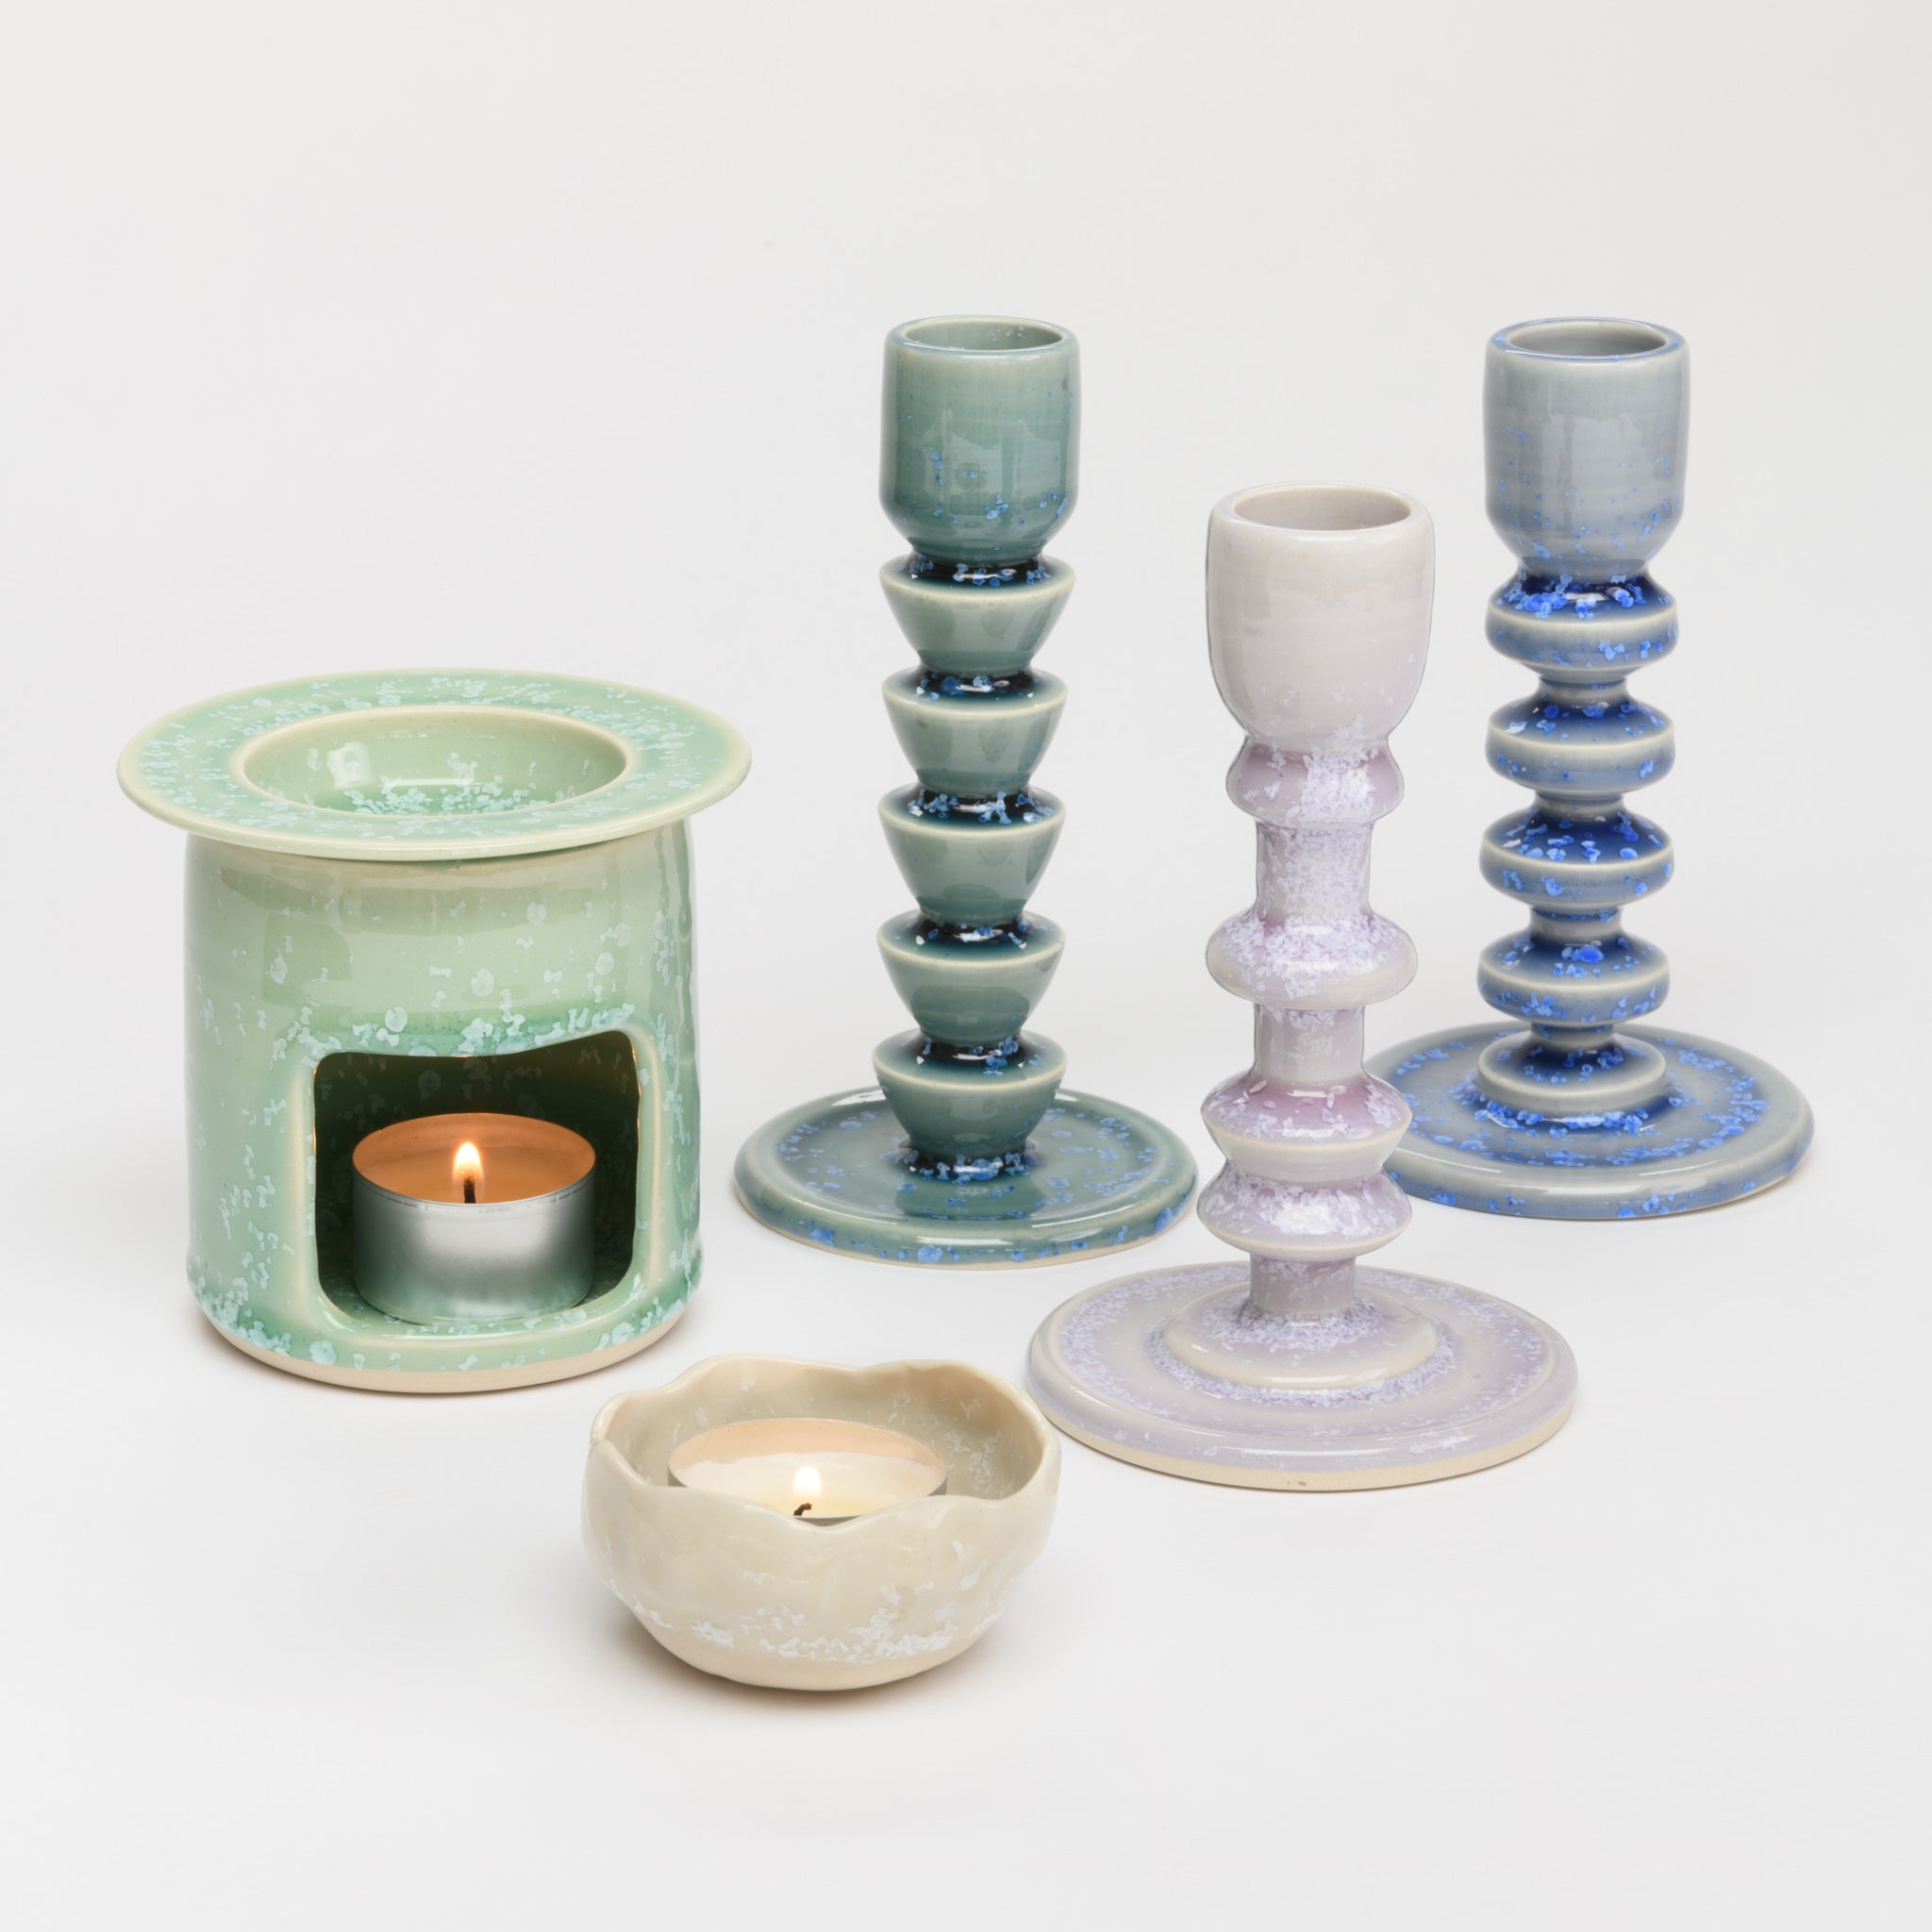 Handmade ceramic candle holders, tealight holders and oil wax burners